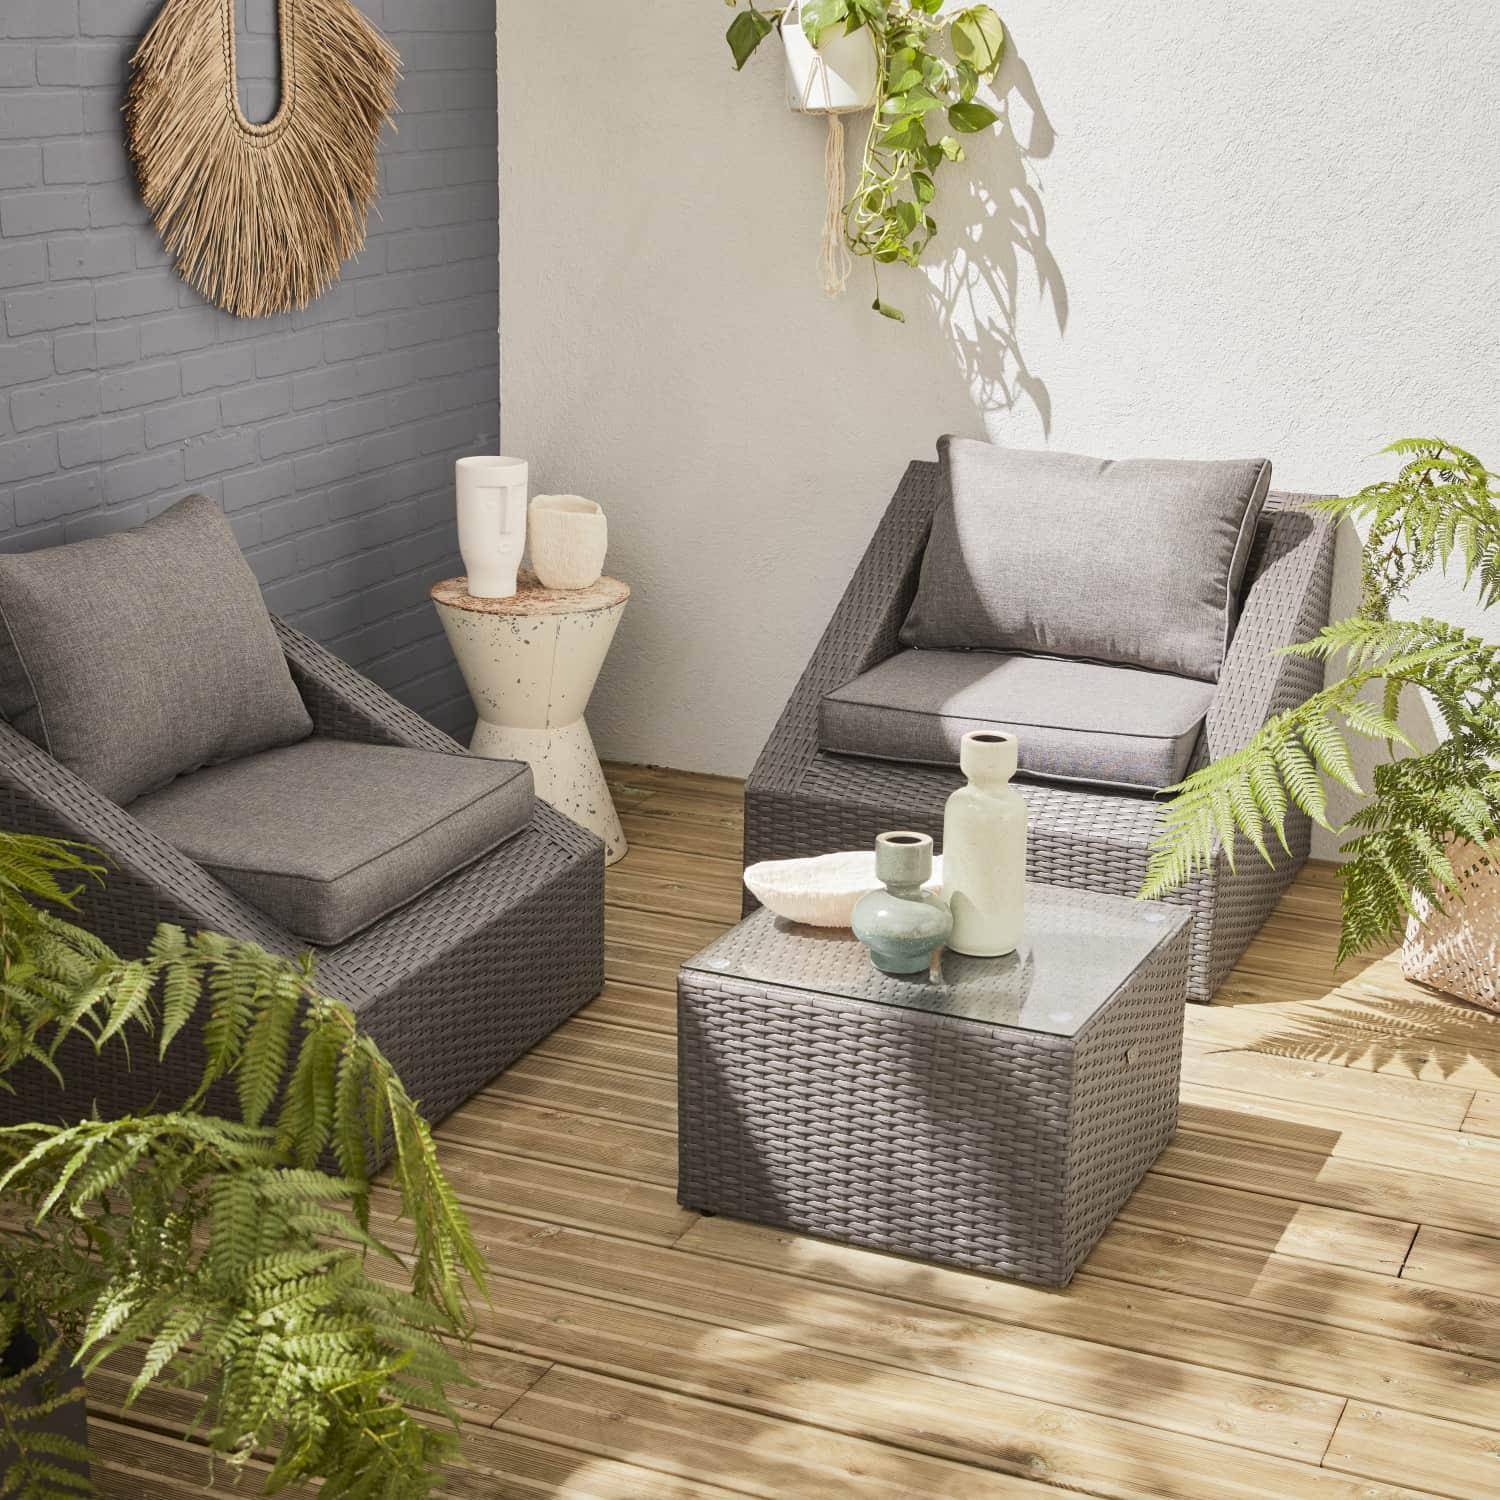 Sofa de jardín, conjunto sofá de exterior, rattan sintético, resina trenzada - Gris, cojines grises, 2 plazas Photo1